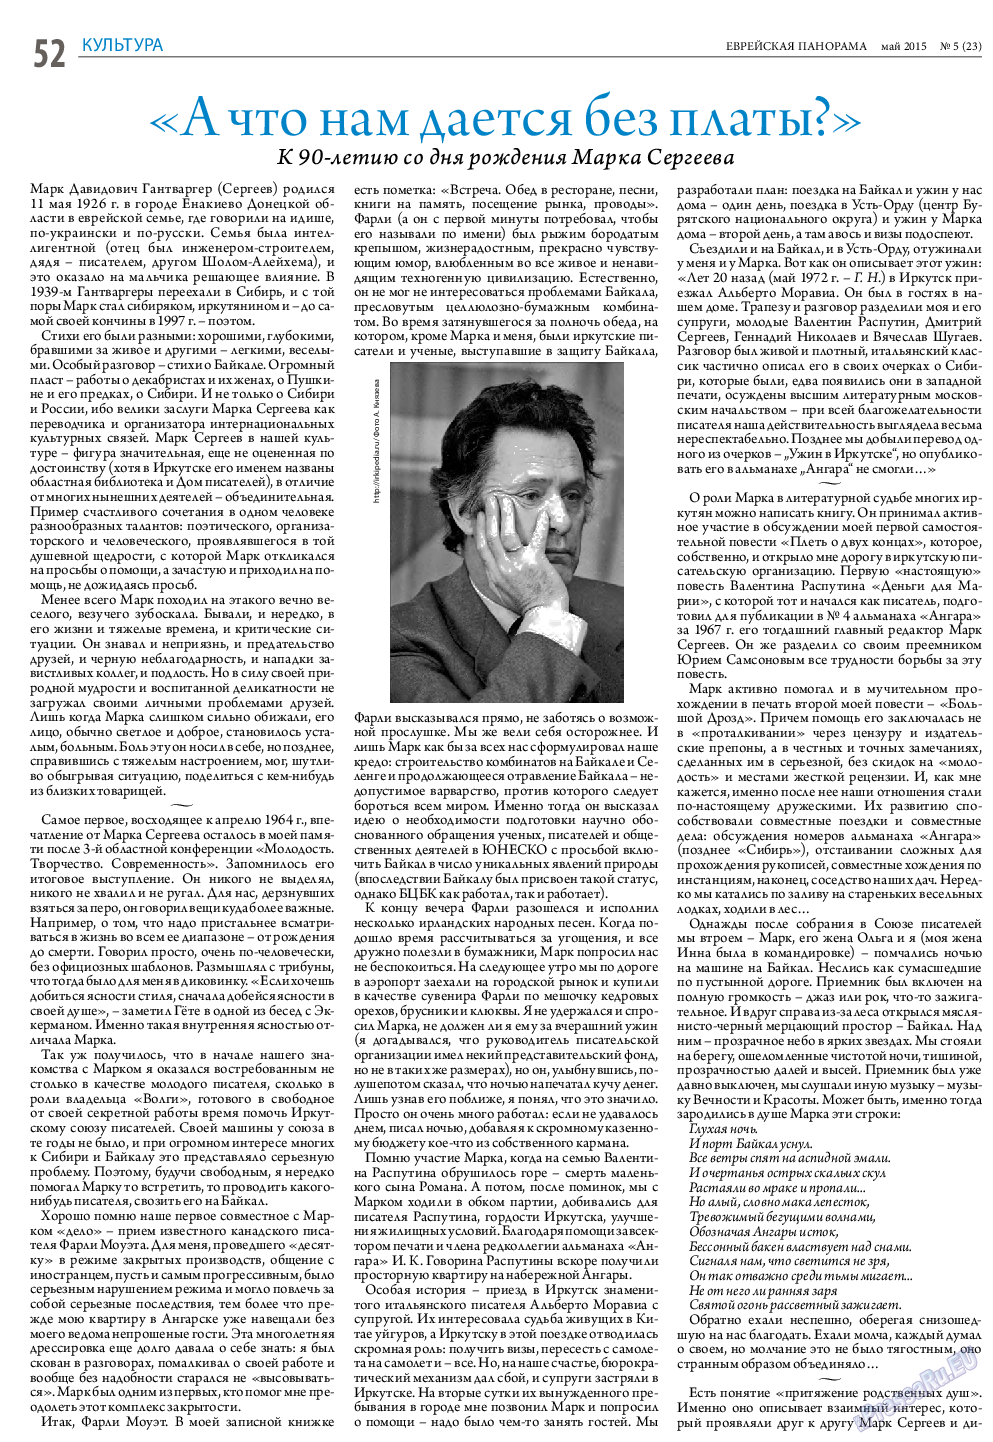 Еврейская панорама, газета. 2016 №5 стр.52